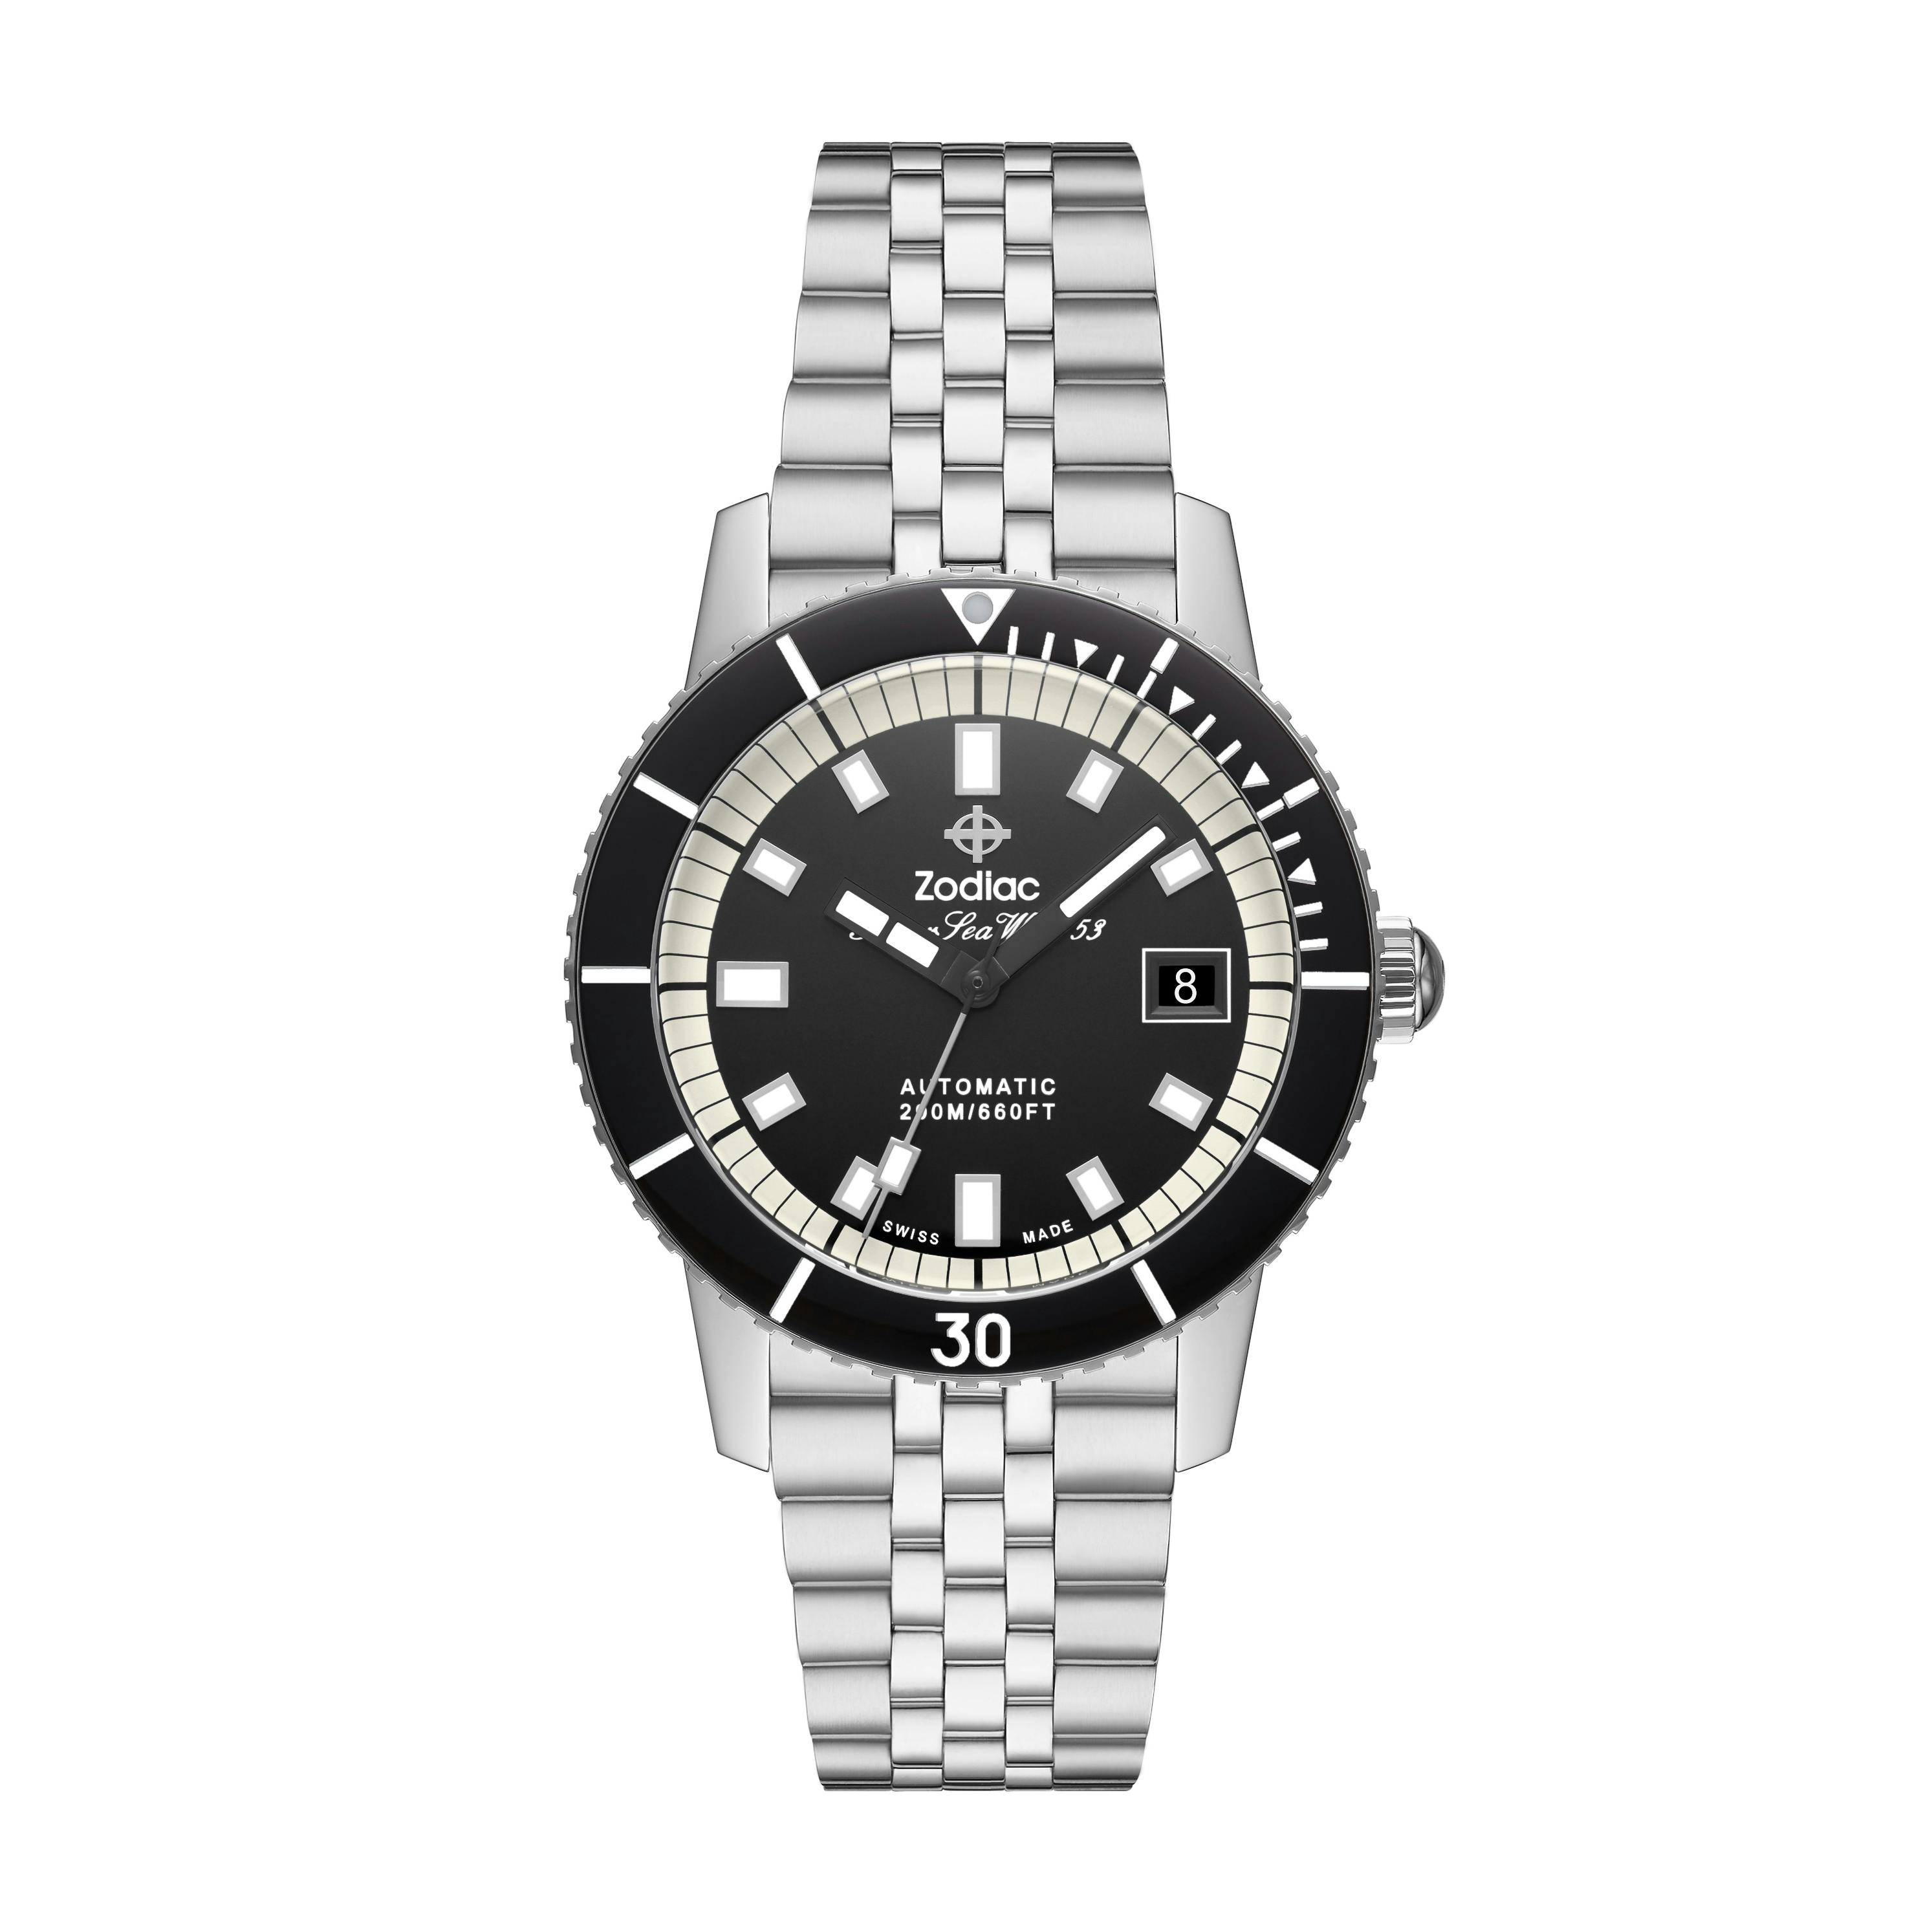 Super Sea Wolf 53 Compression Automatic Watch